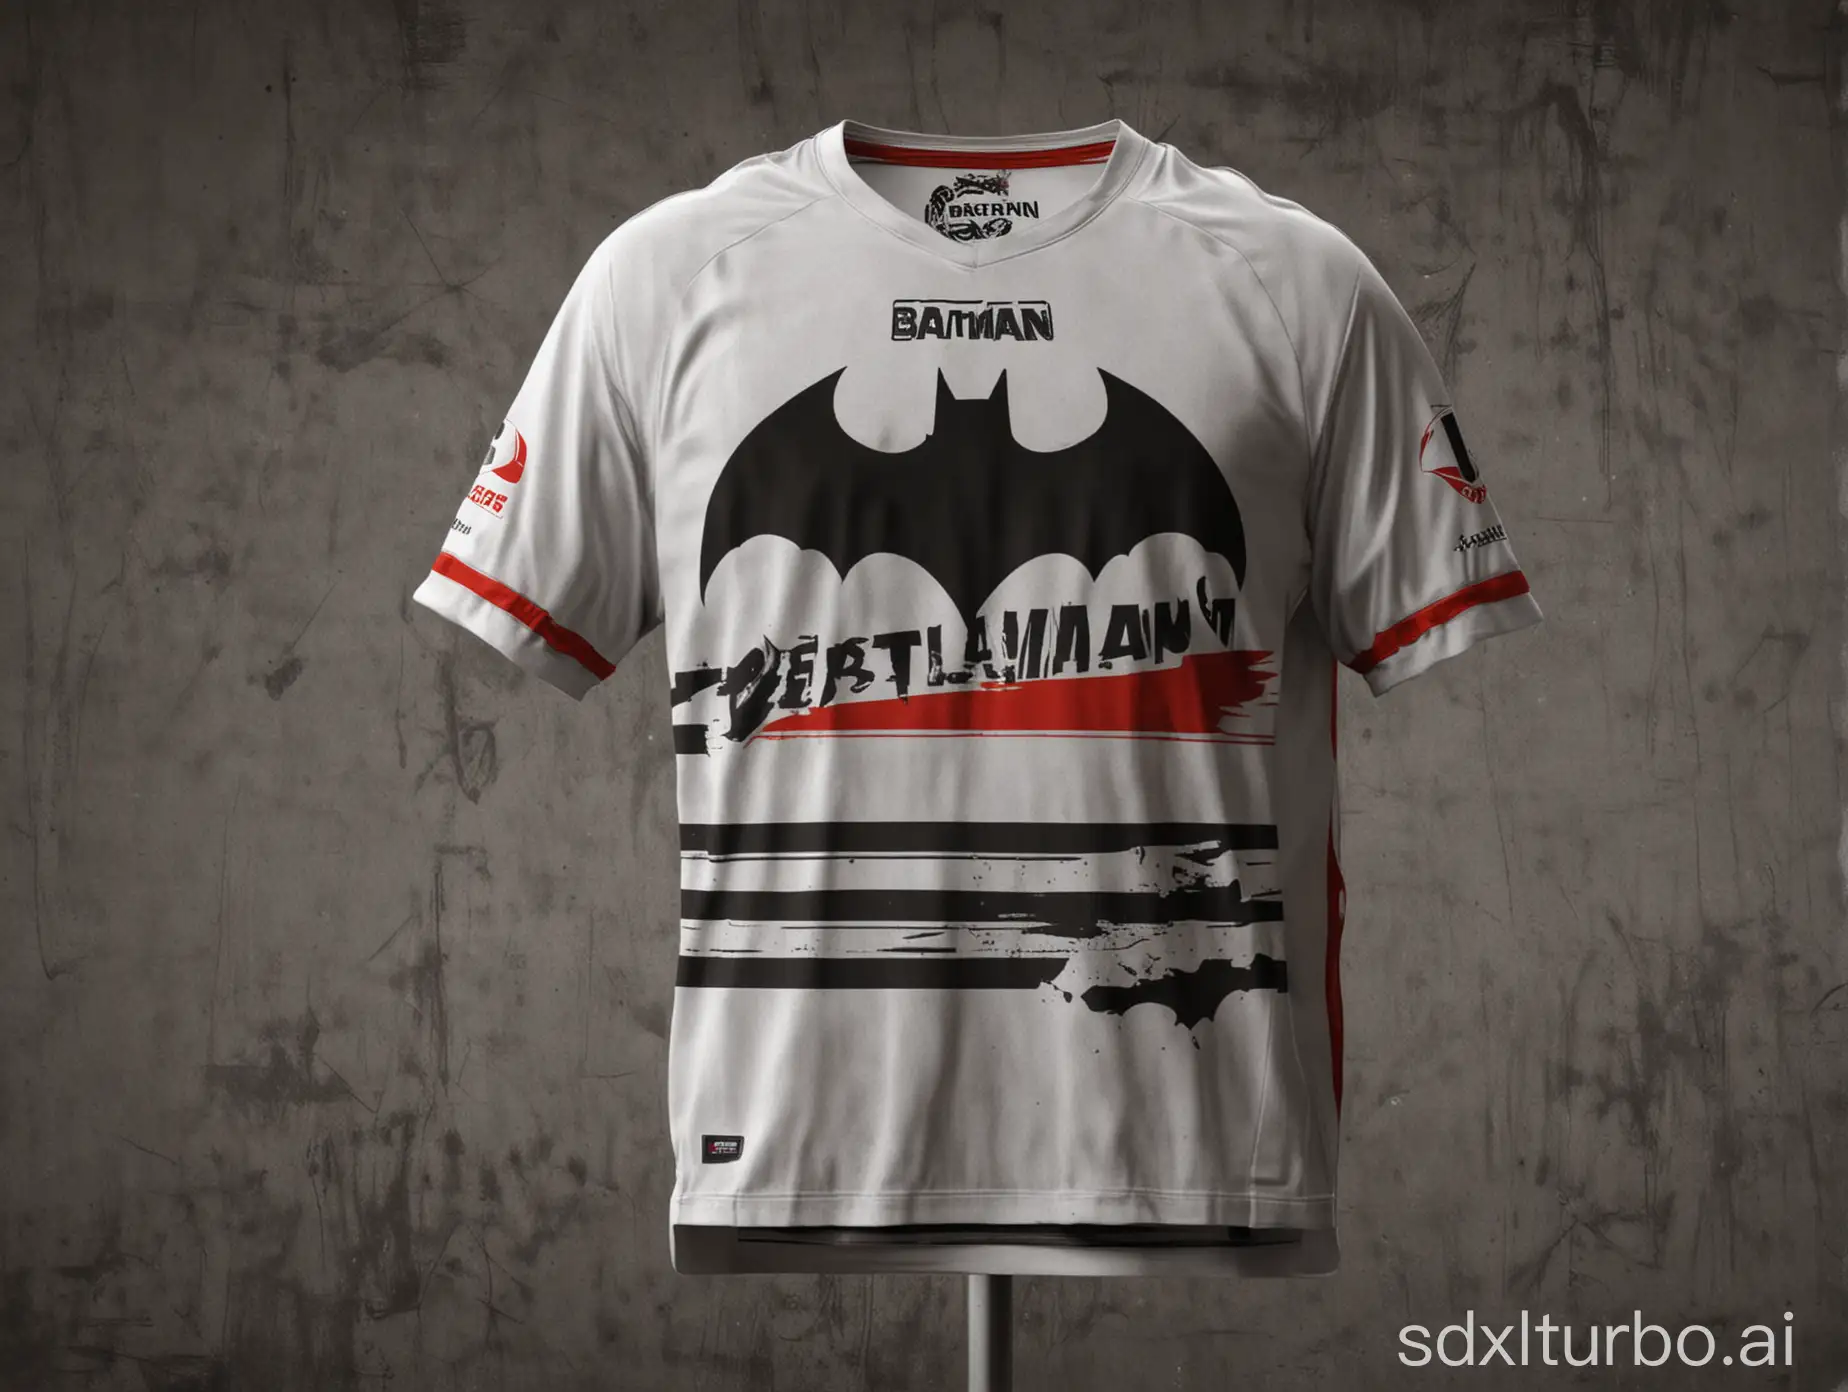 Batman-Petrolspor-Jersey-Design-with-Stadium-and-Flag-Background